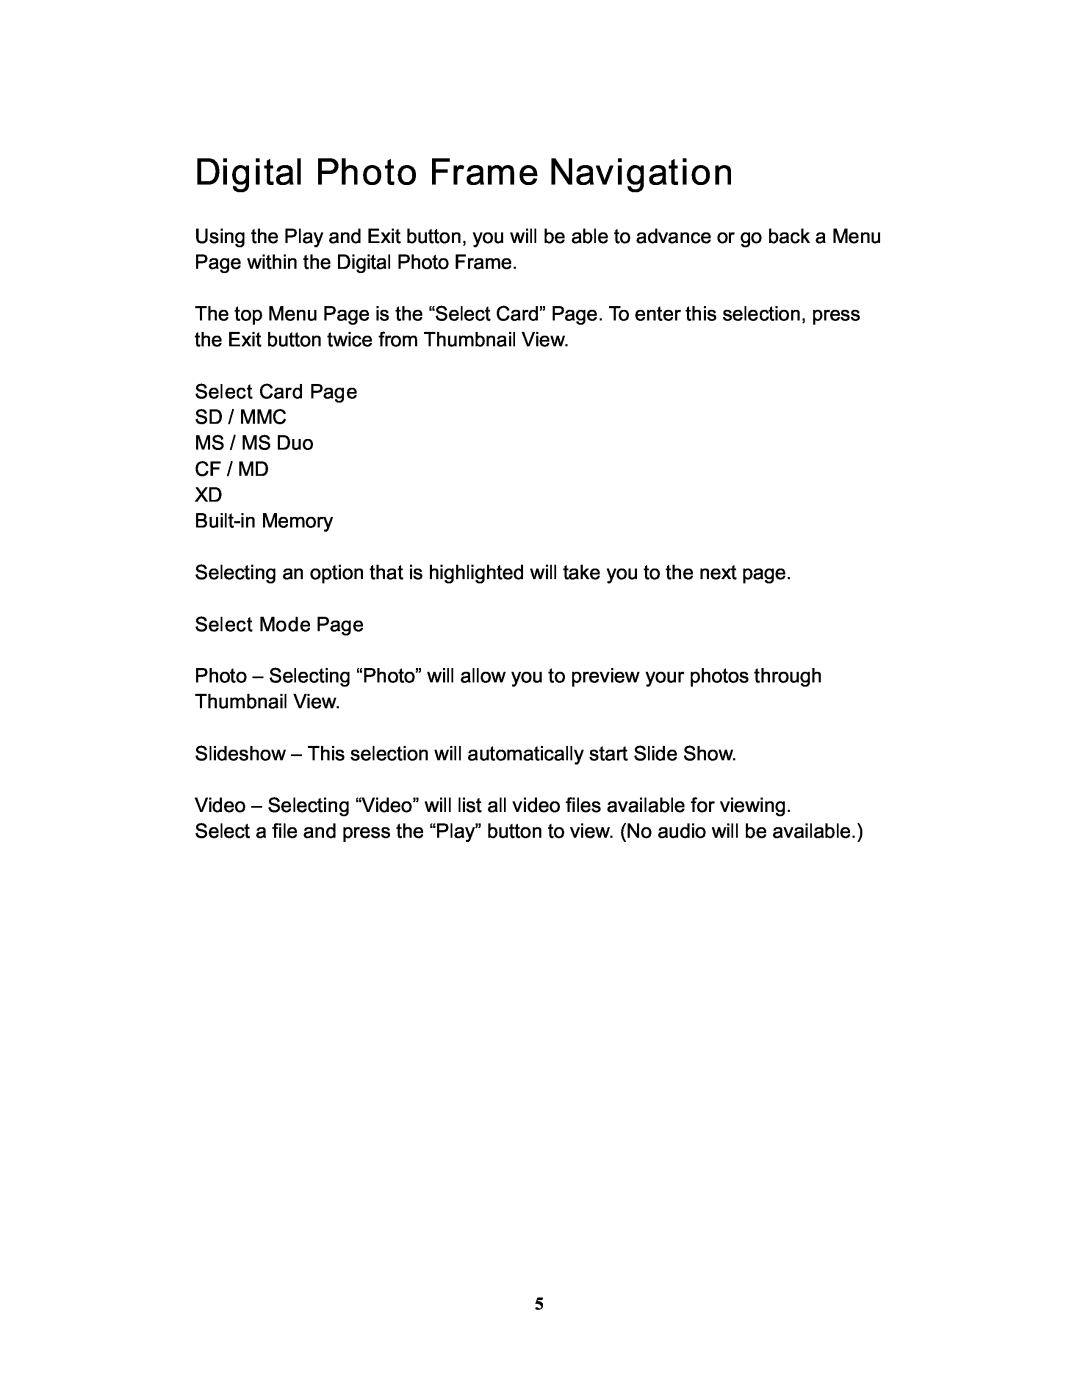 Westinghouse DPF-1021 user manual Digital Photo Frame Navigation 